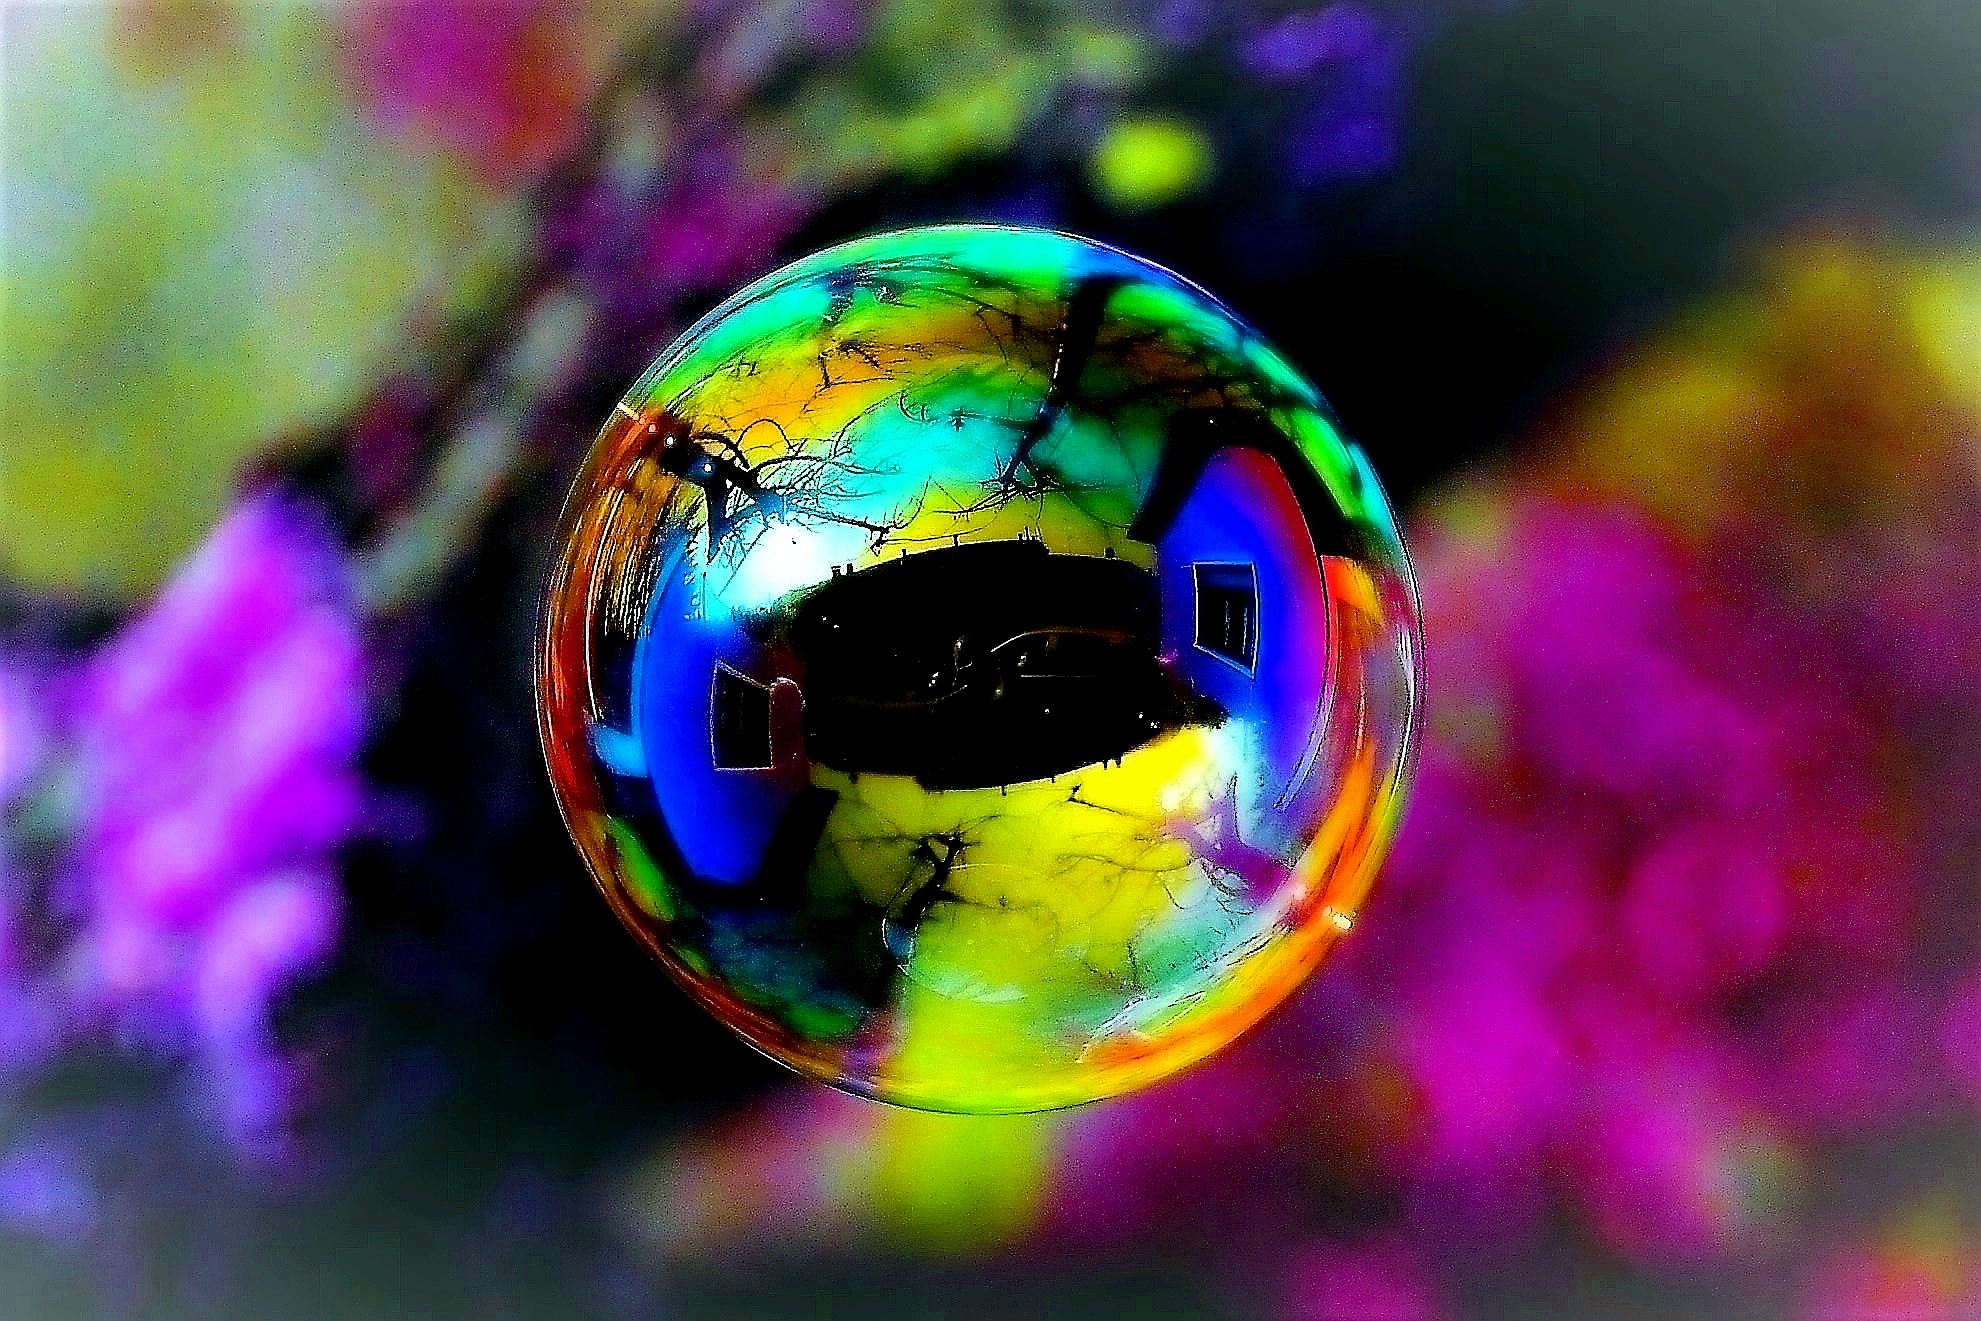 The soap bubble...